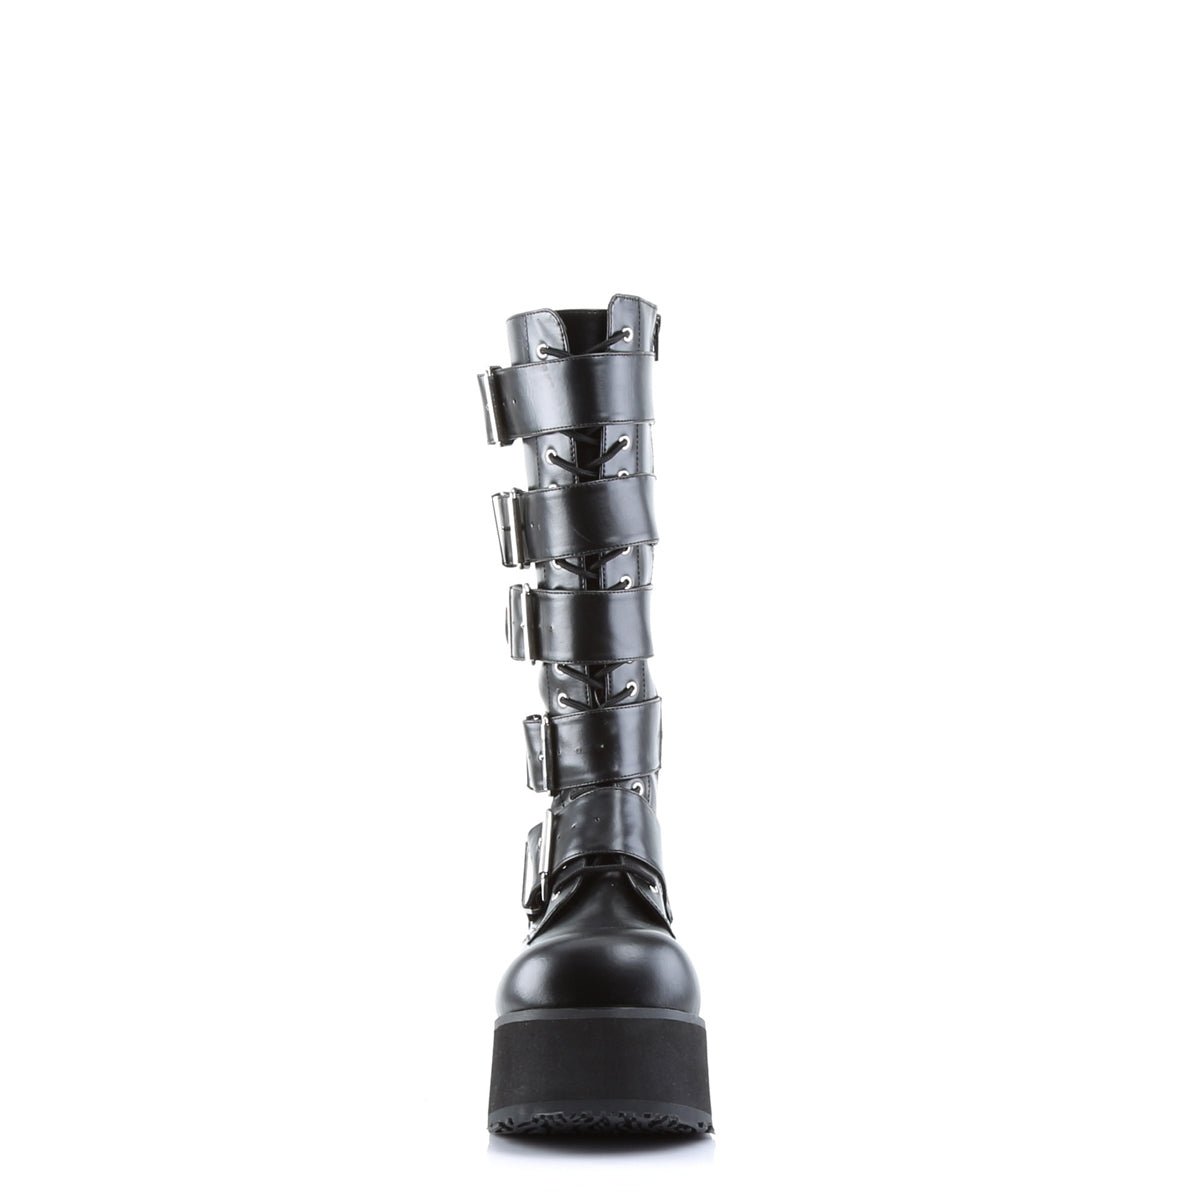 Too Fast | Demonia Trashville 518 | Black Vegan Leather Unisex Platform Boots